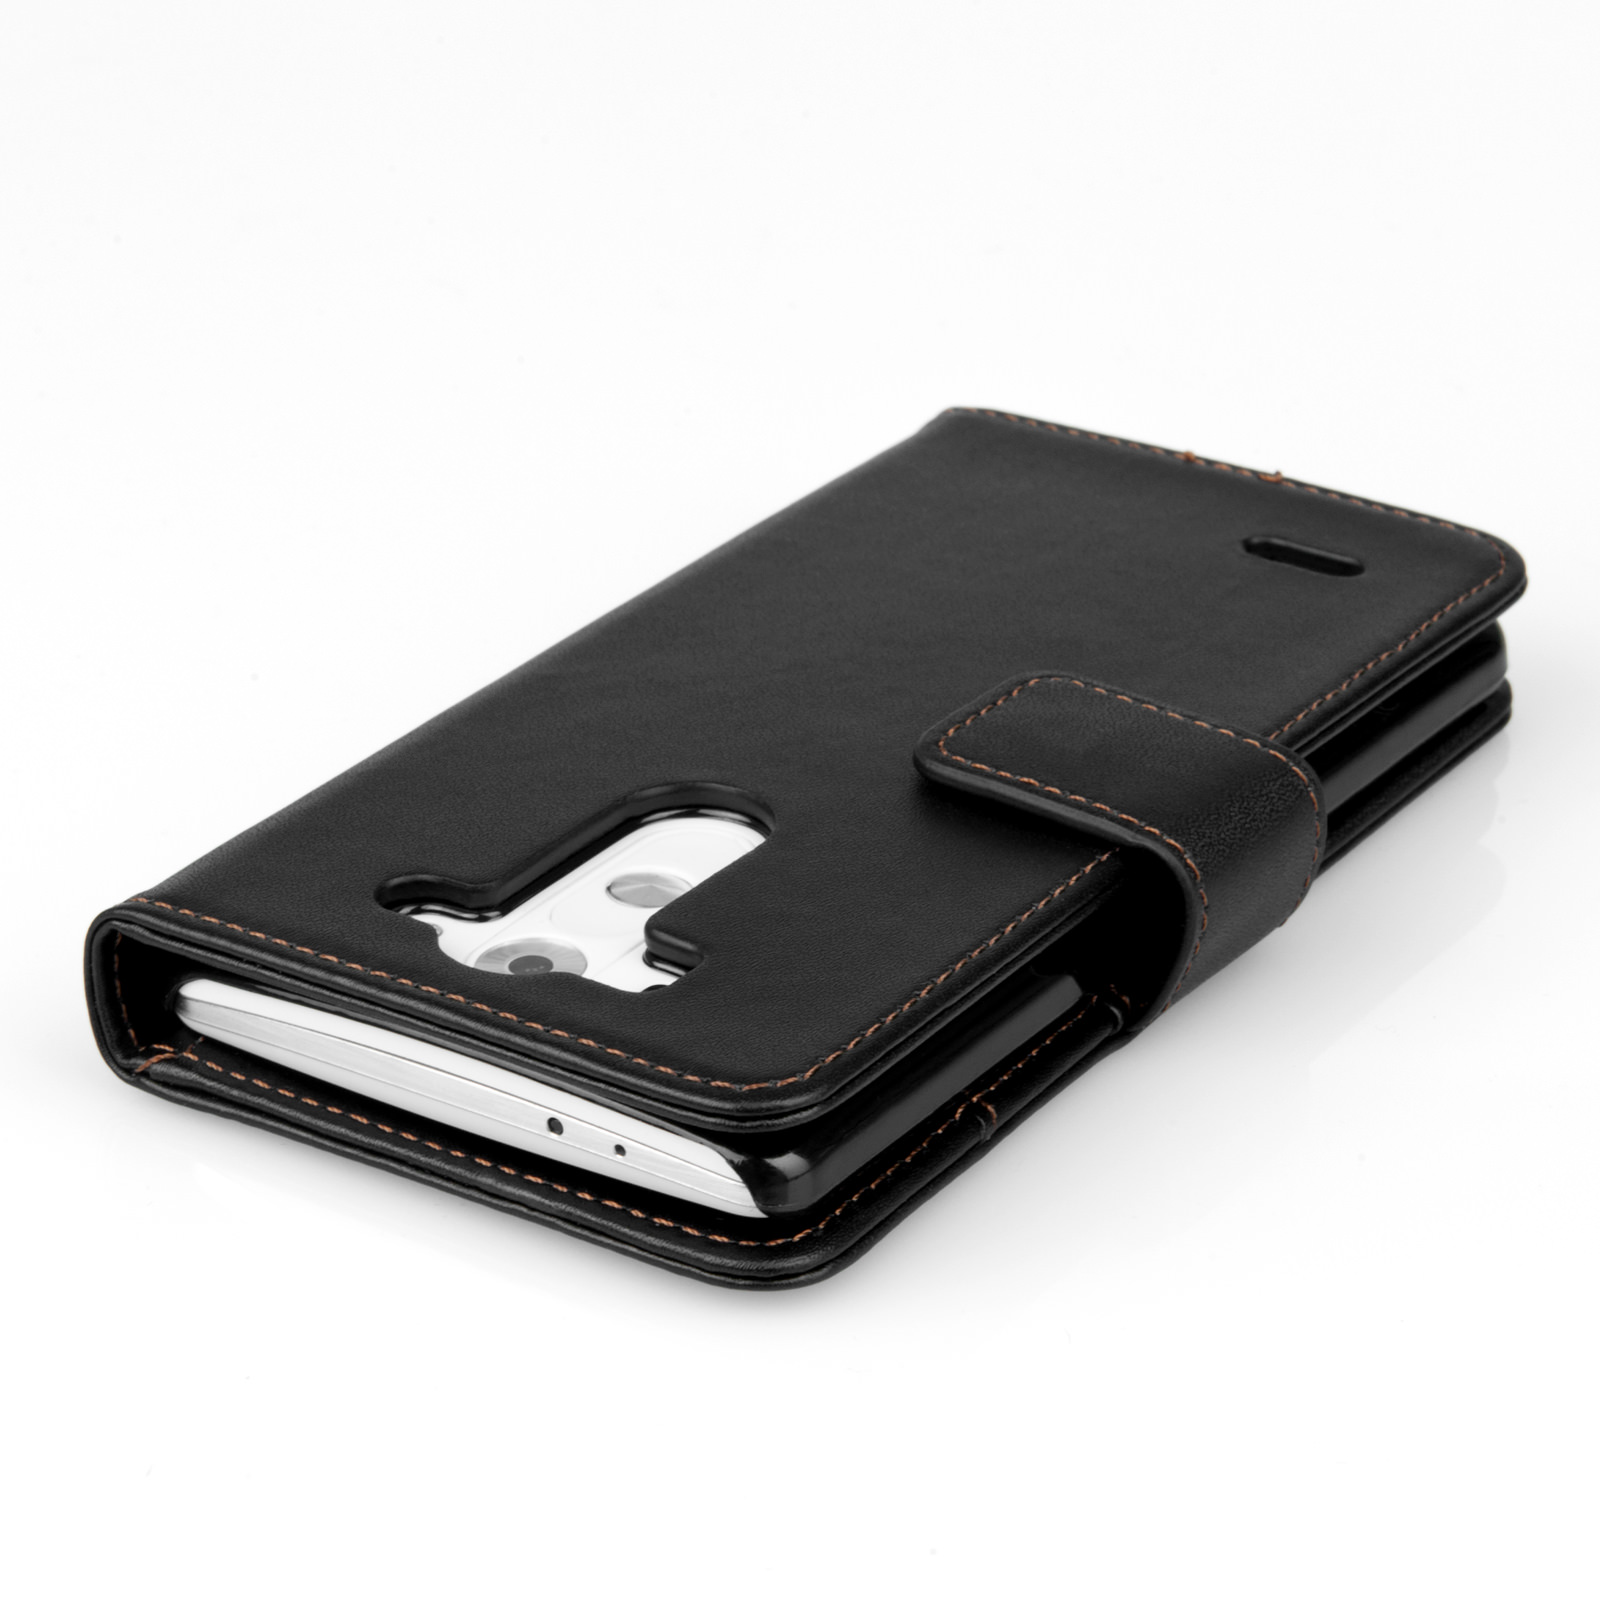 YouSave LG G3 S Leather-Effect Wallet Case - Black